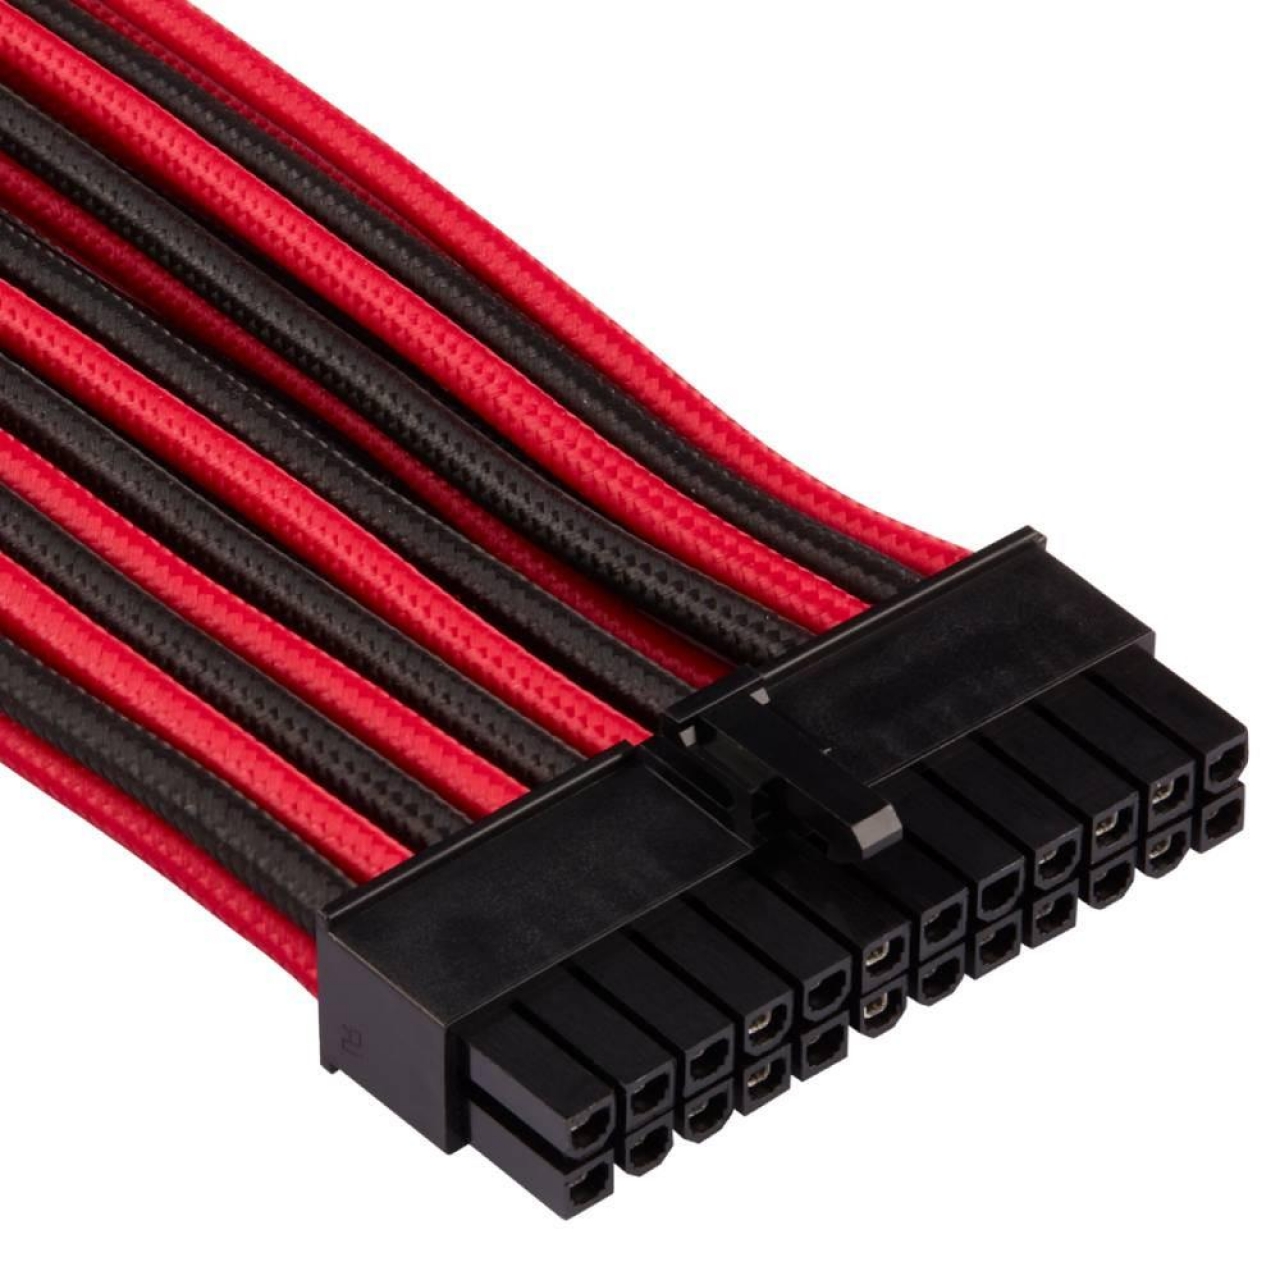 CORSAIR CP-8920233 Premium Bireysel Kılıflı ATX 24-Pin Kablo Tip 4 Gen 4 – Kırmızı/Siyah